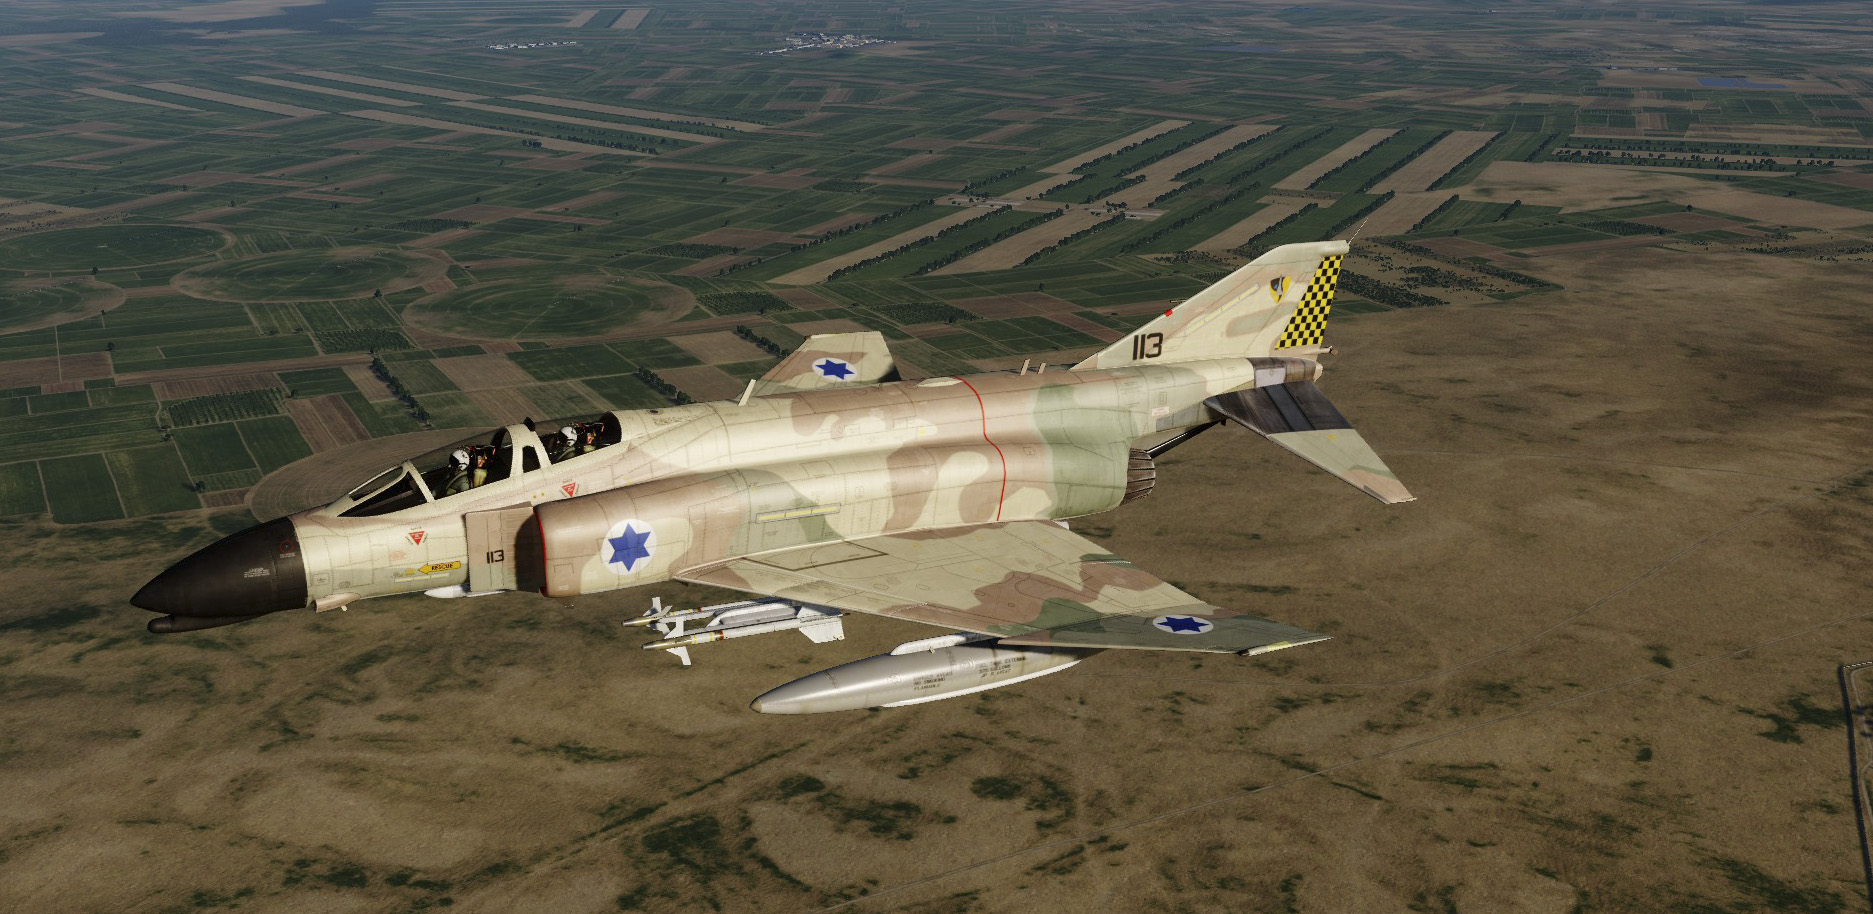 VSN F-4B Israeli Air Force 69 Squadron "Hammers"